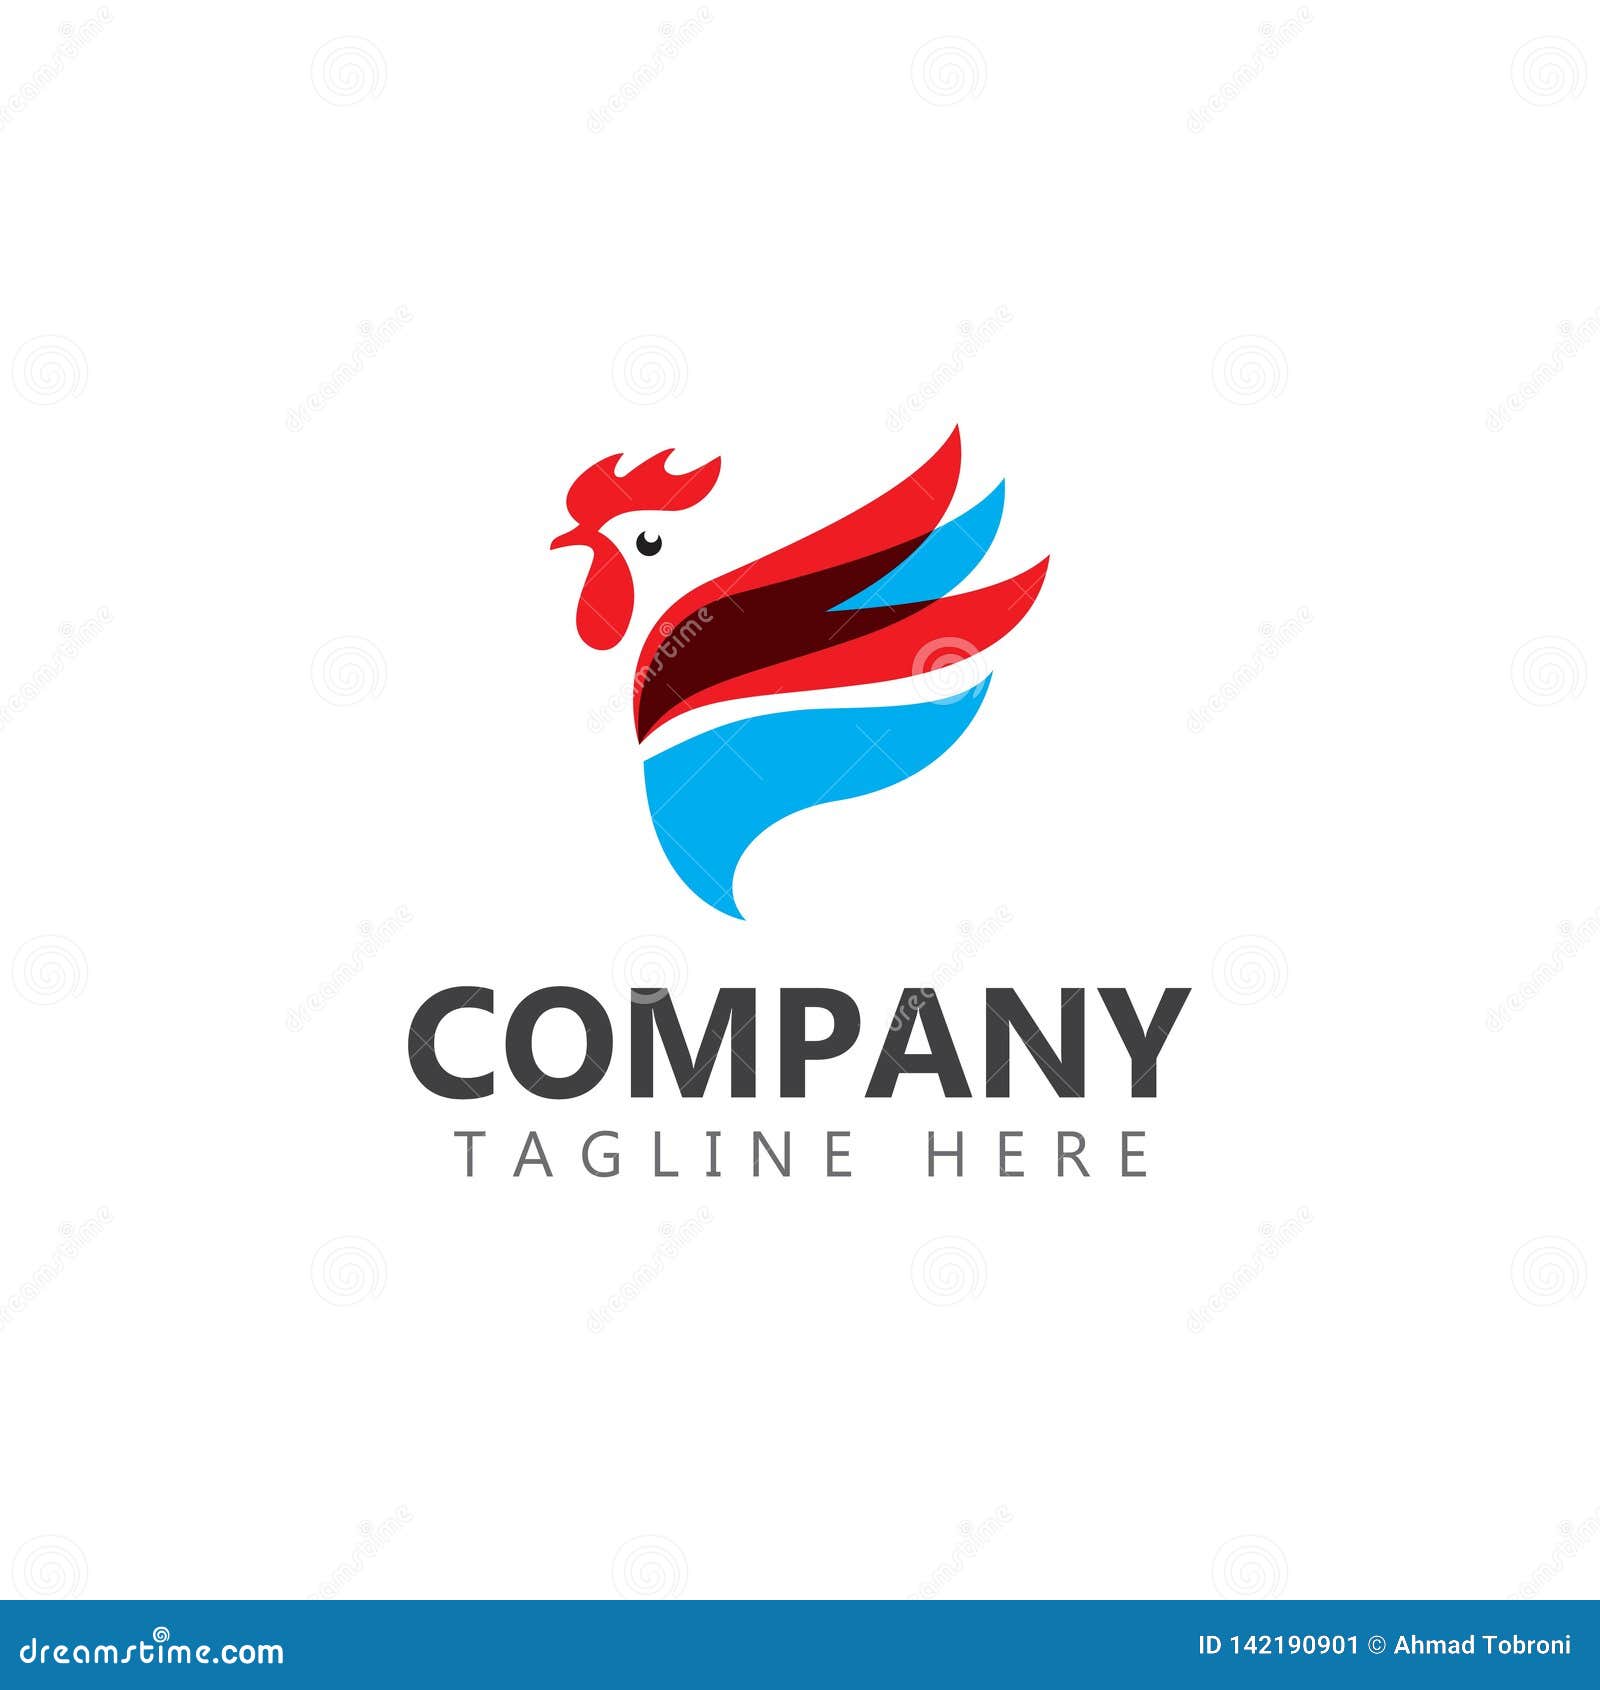 Chicken Company Logo Vector Template Design Illustration Stock Vector Illustration Of Food Meat